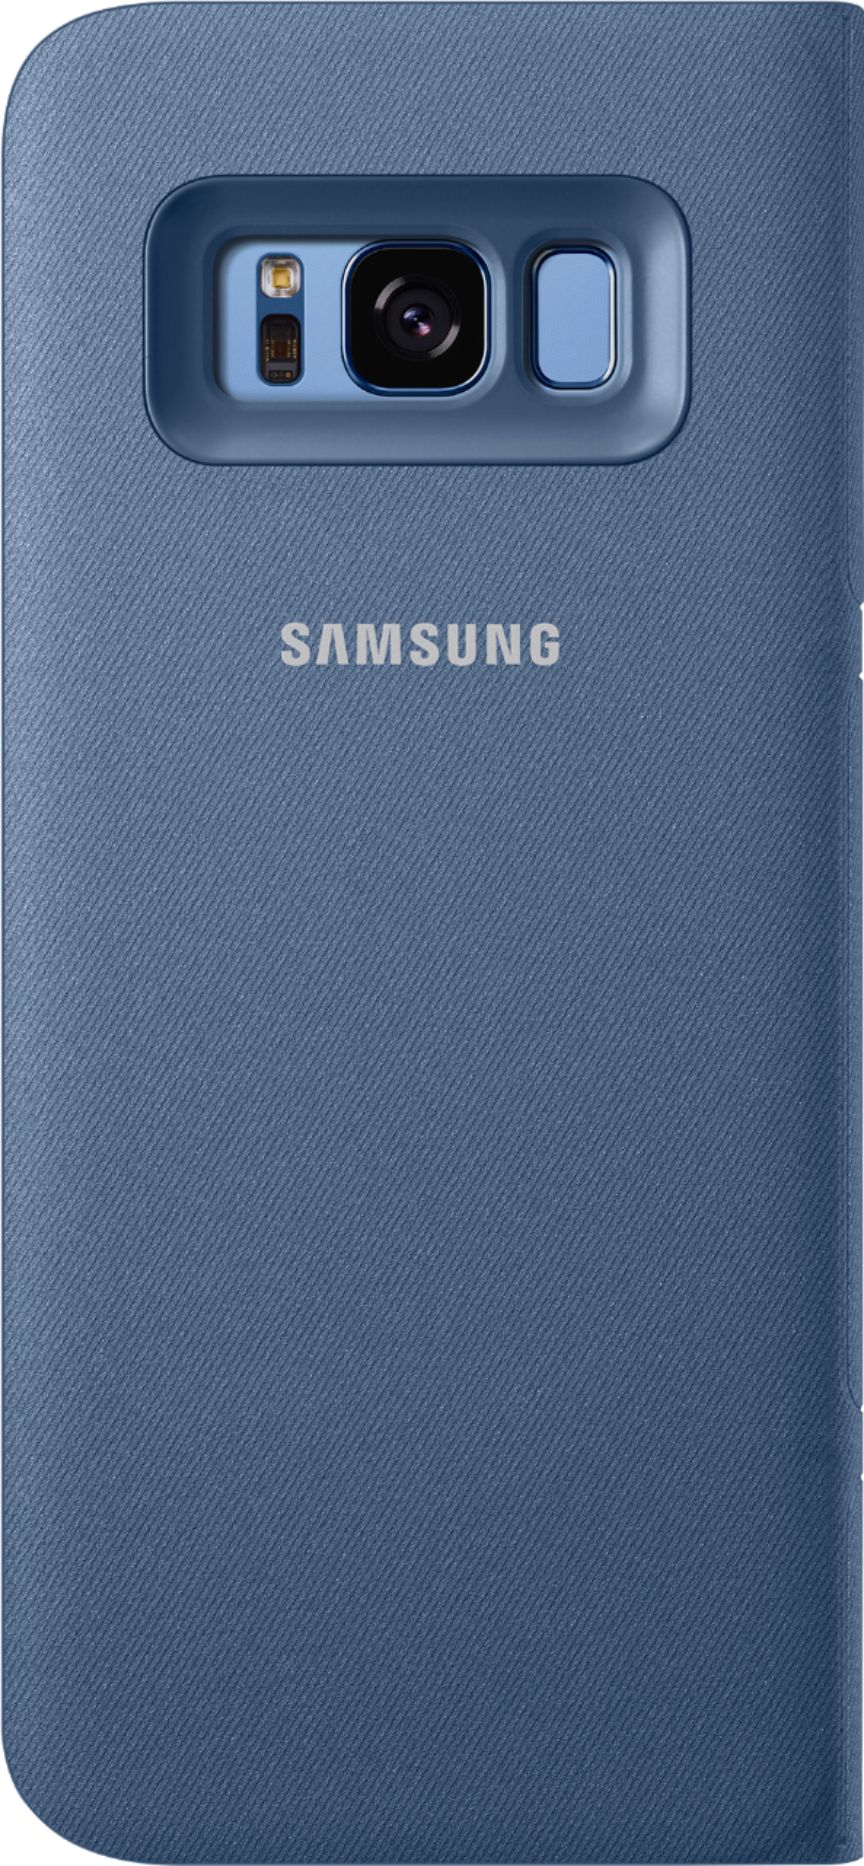 LED Wallet Cover for Samsung Galaxy S8 Blue EF-NG950PLEGUS Buy